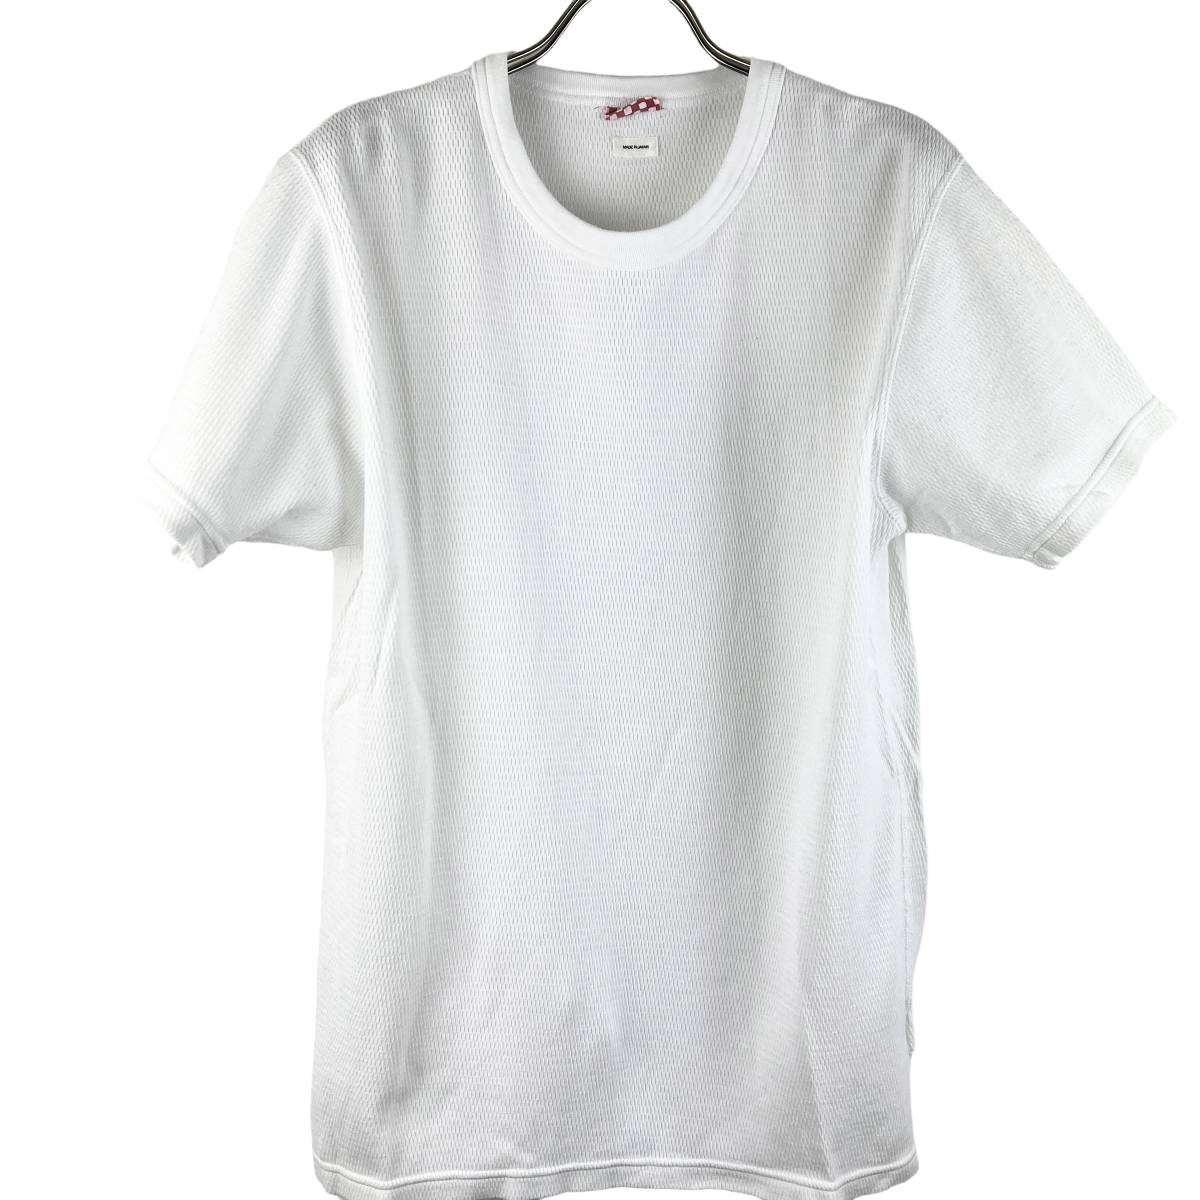 VISVIM(ビズビム) SUBLIG THERMAL CREW KNIT T Shirt (white)